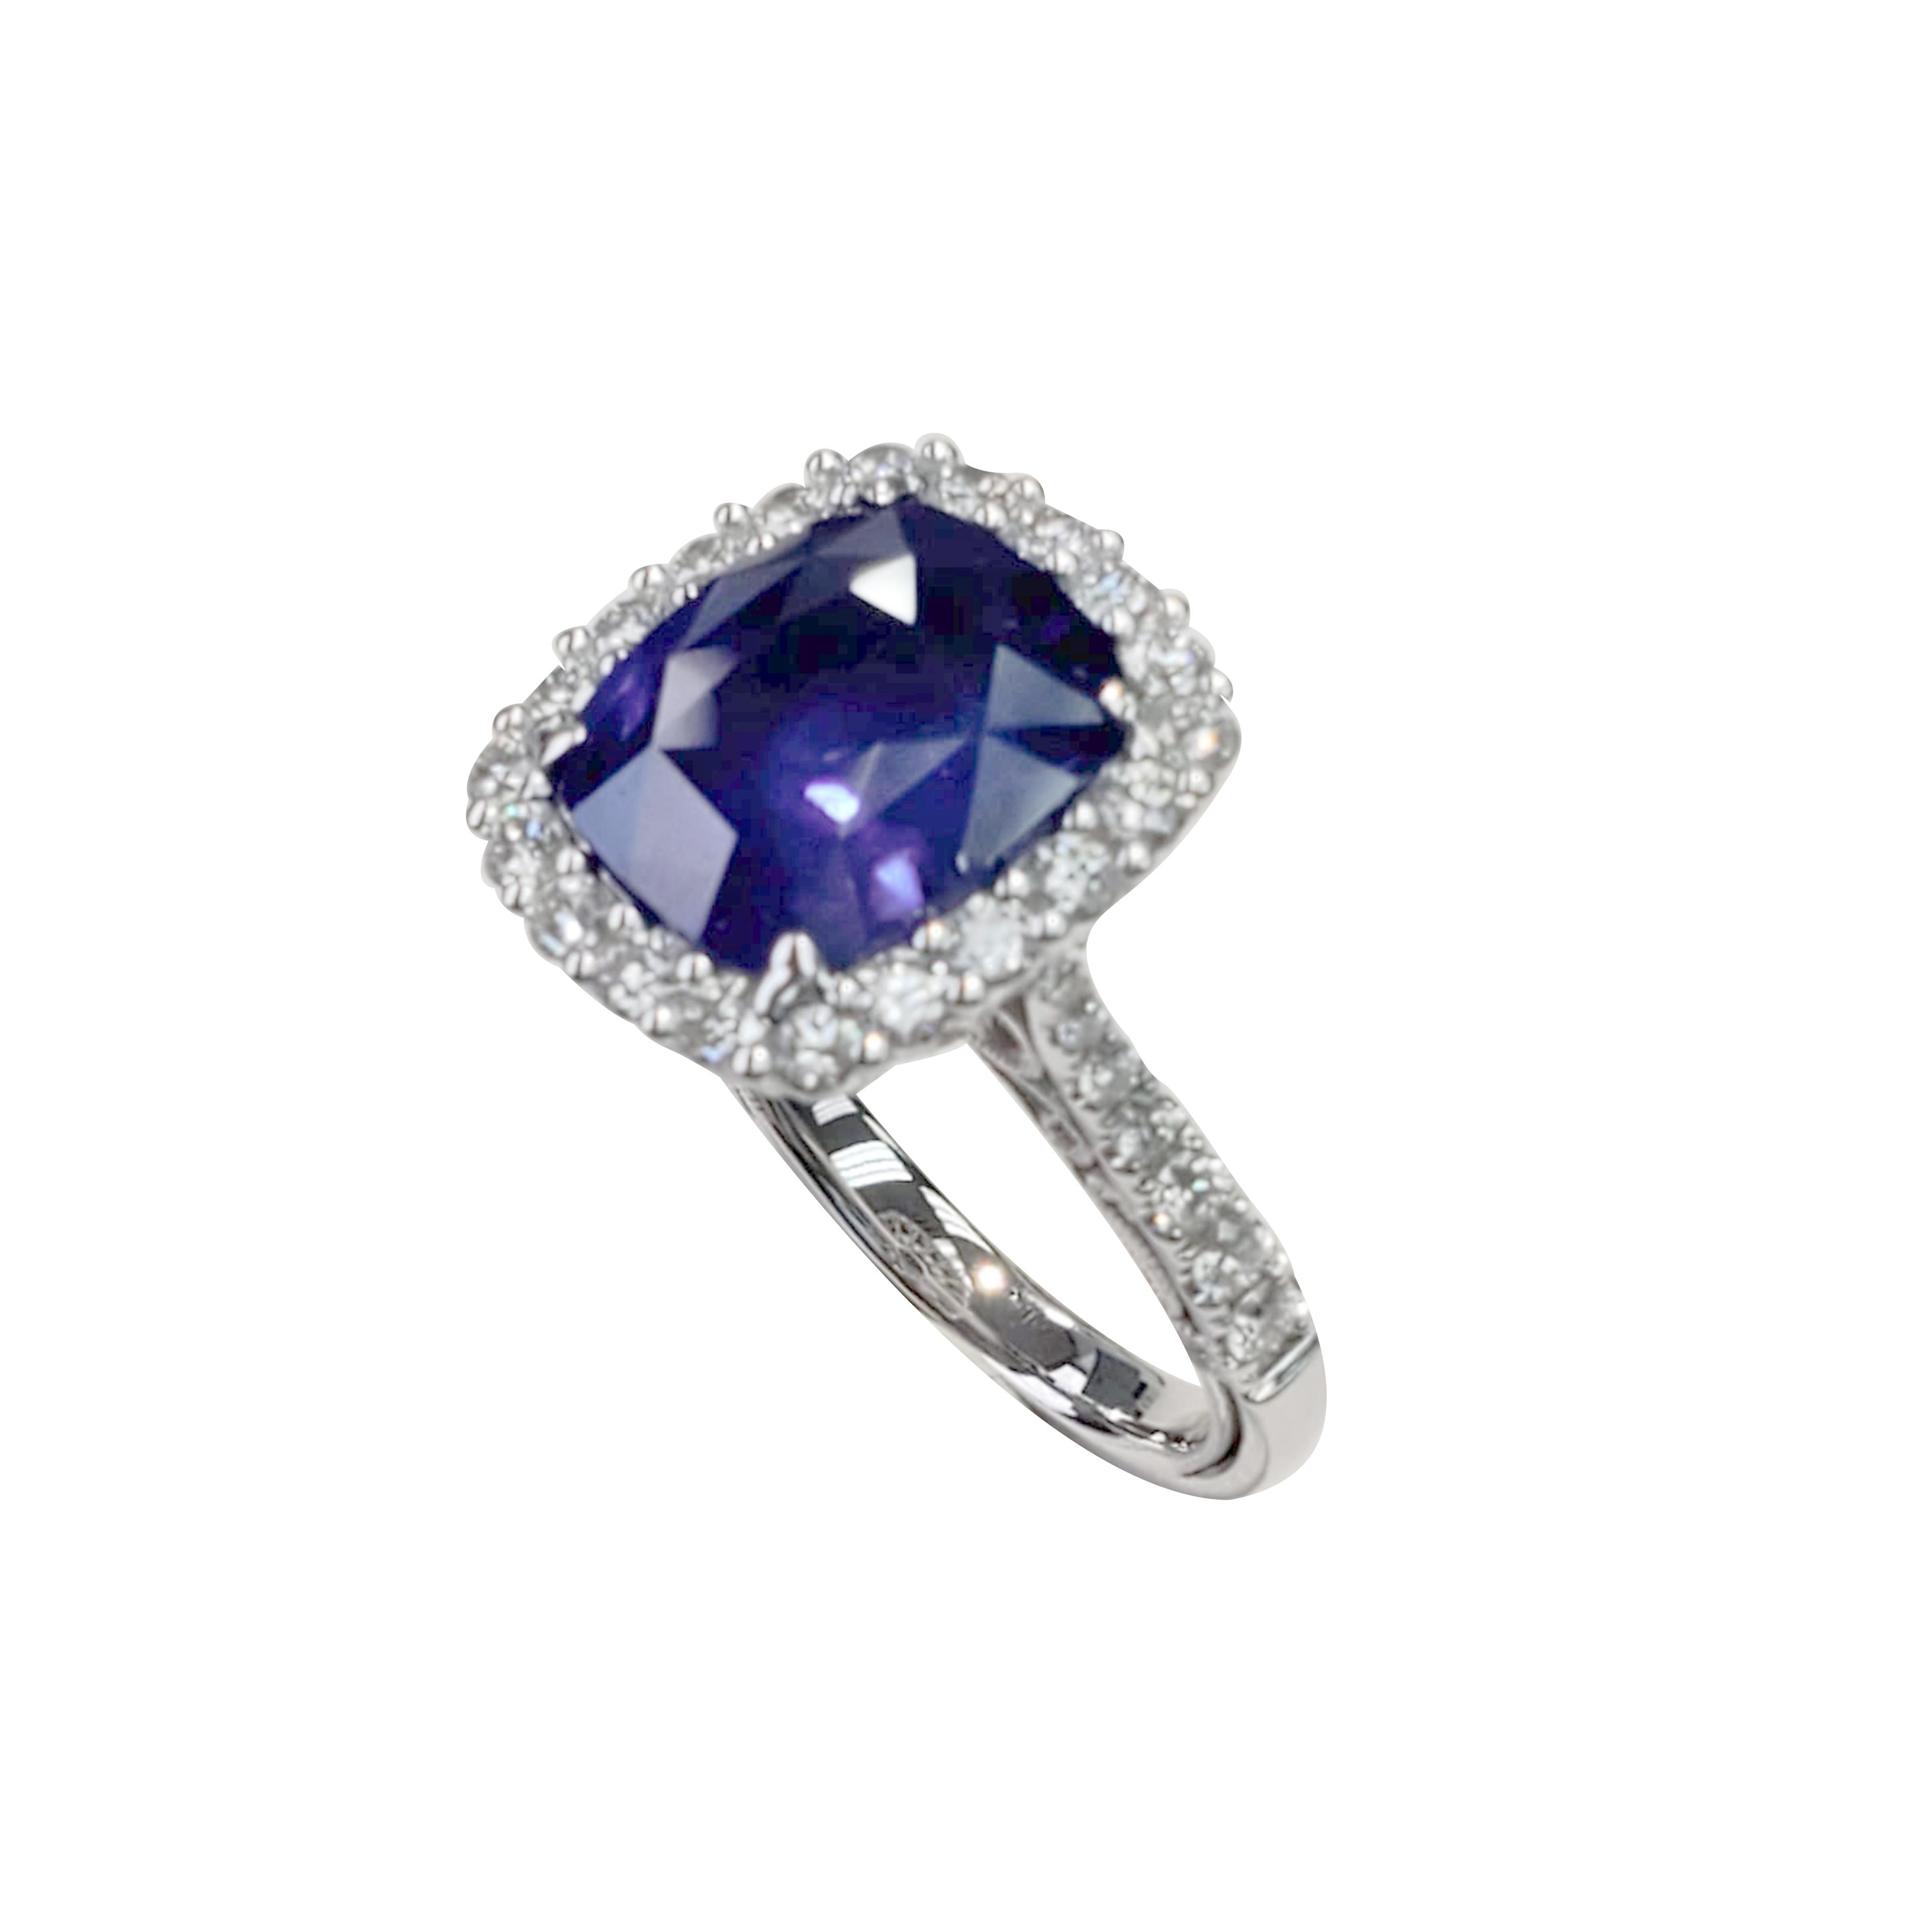 GIA Certified

Blue Sapphire - 5.66ct

White Diamond - 0.95ct

White Gold - 18k 

